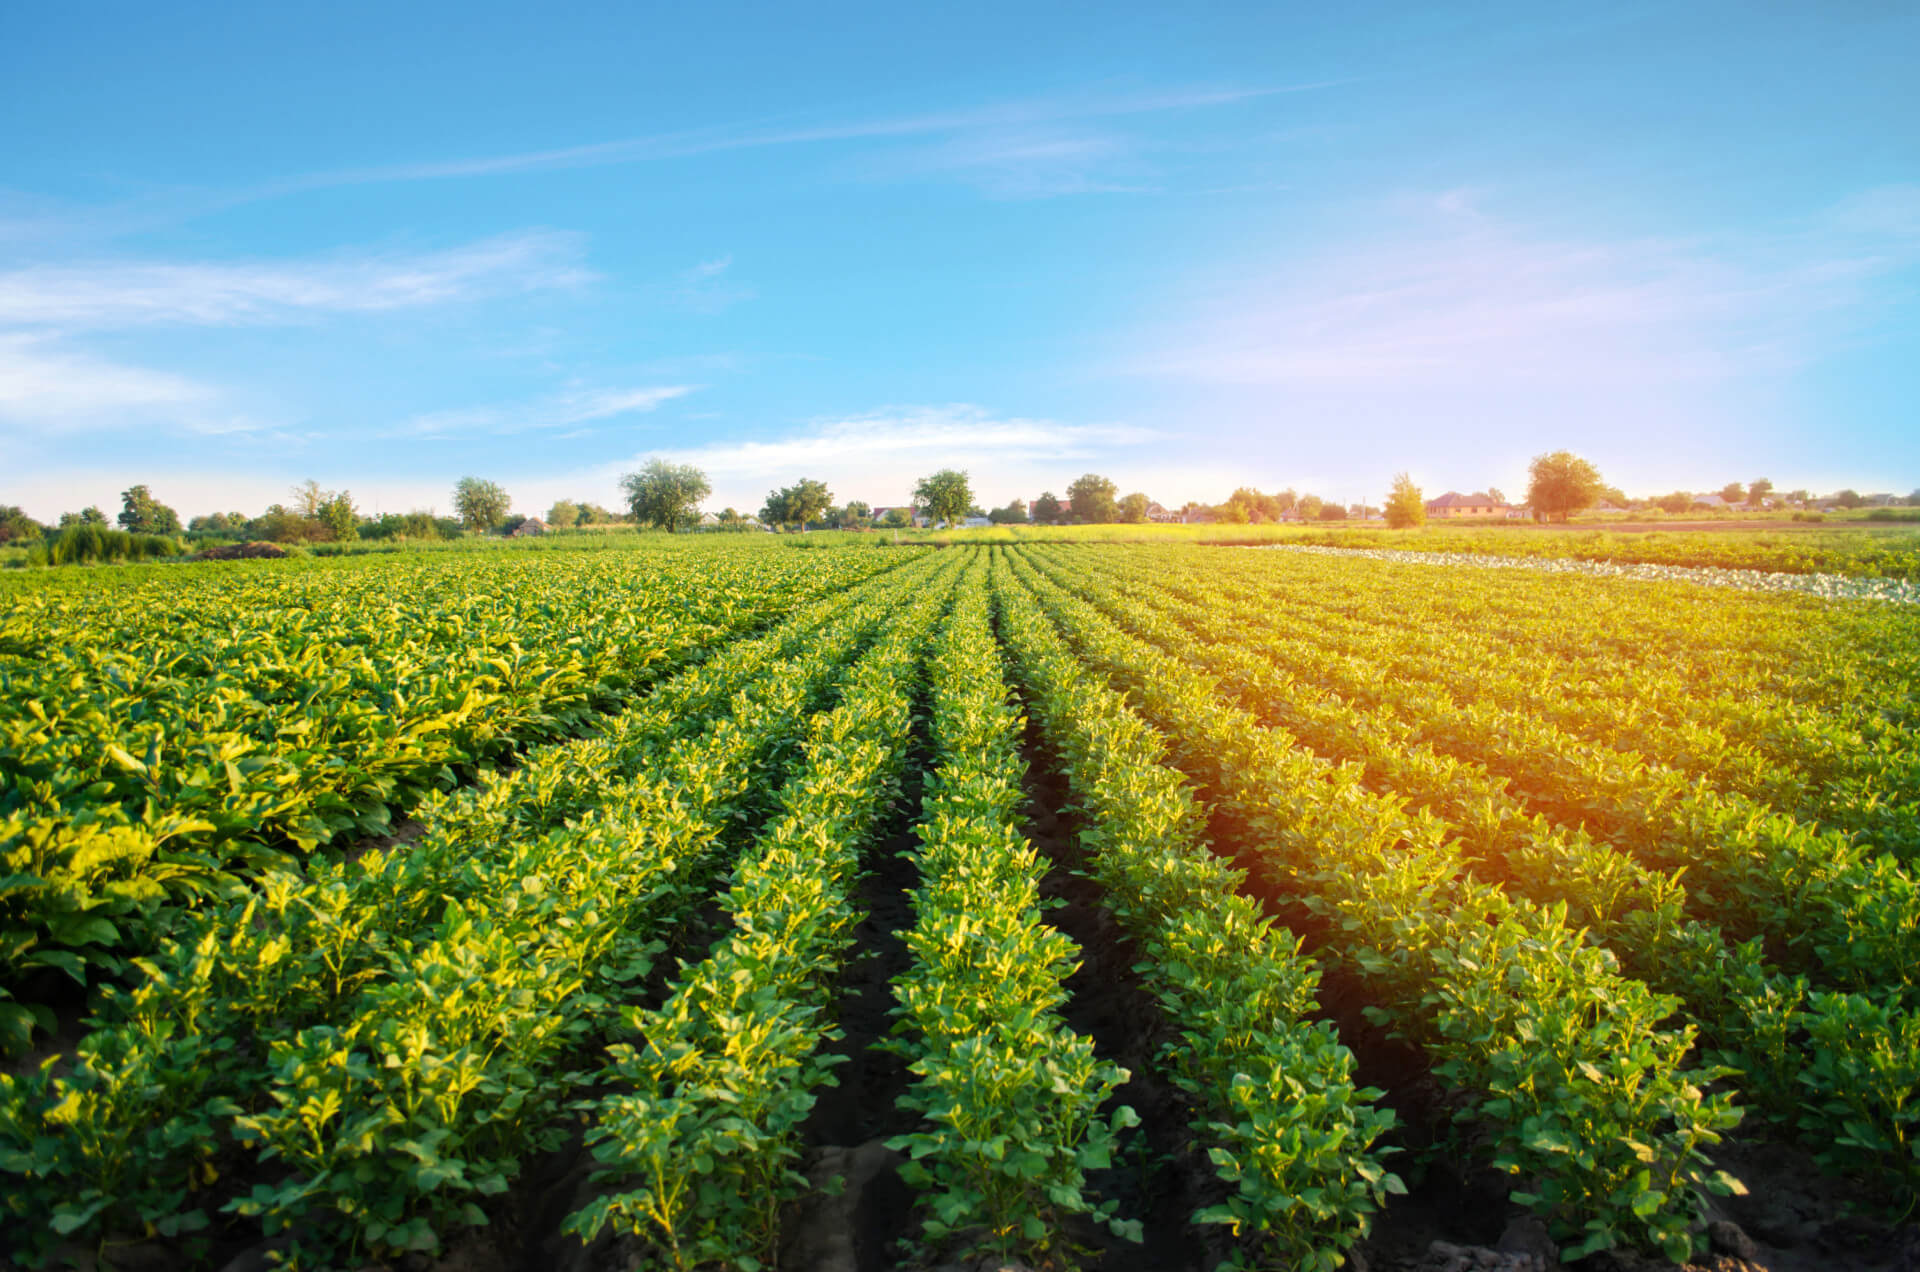 potato-plantations-grow-field-vegetable-rows-farming-agriculture-landscape